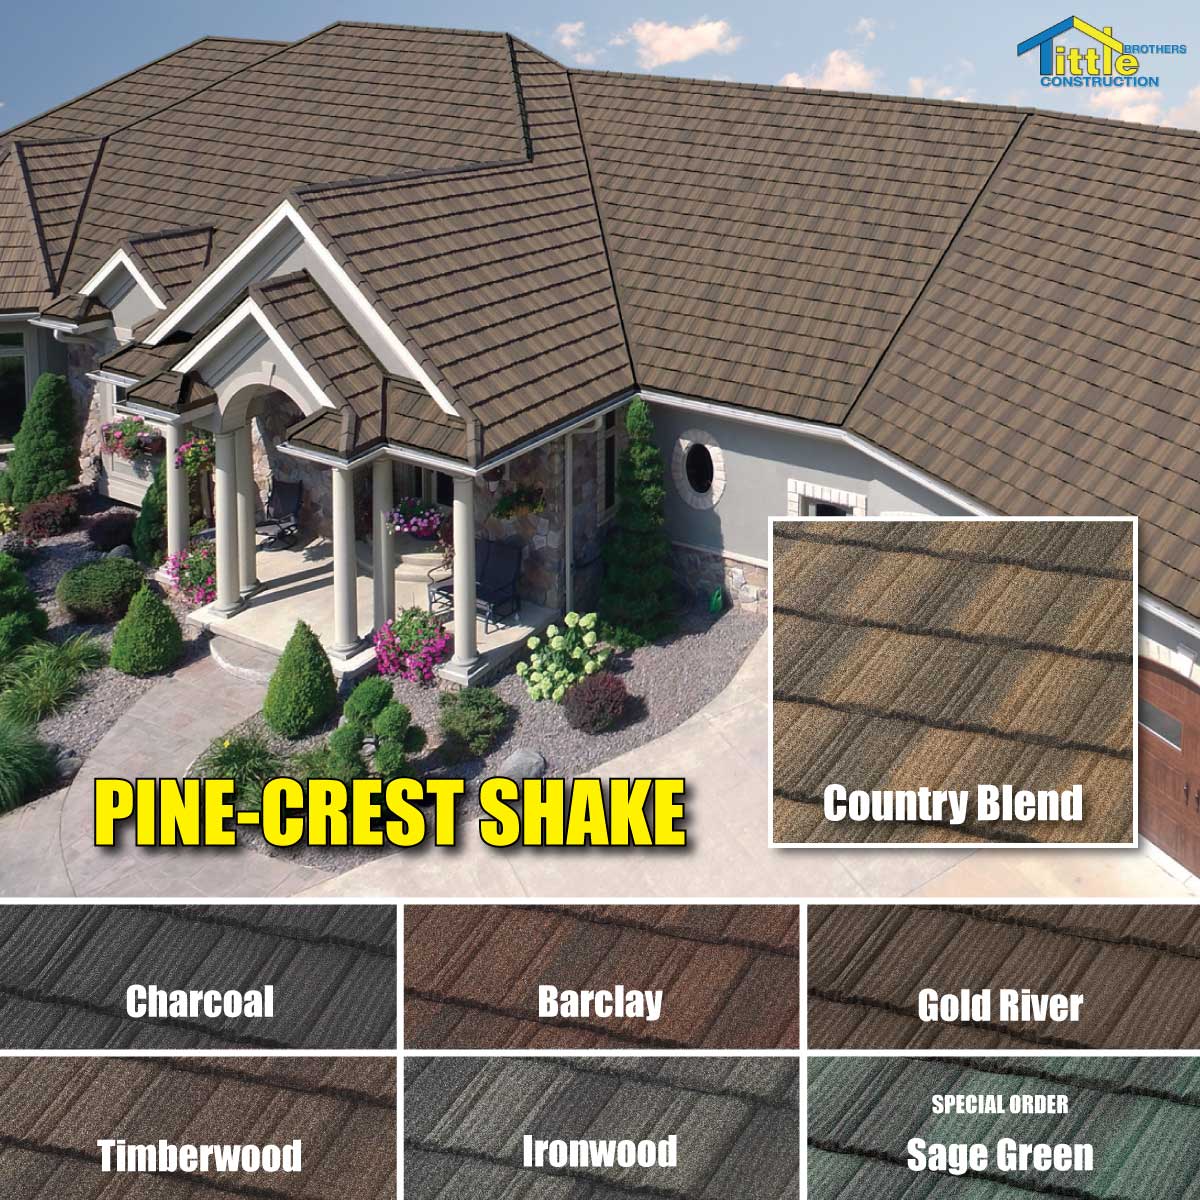 pine-crest shake style metal roof shingle